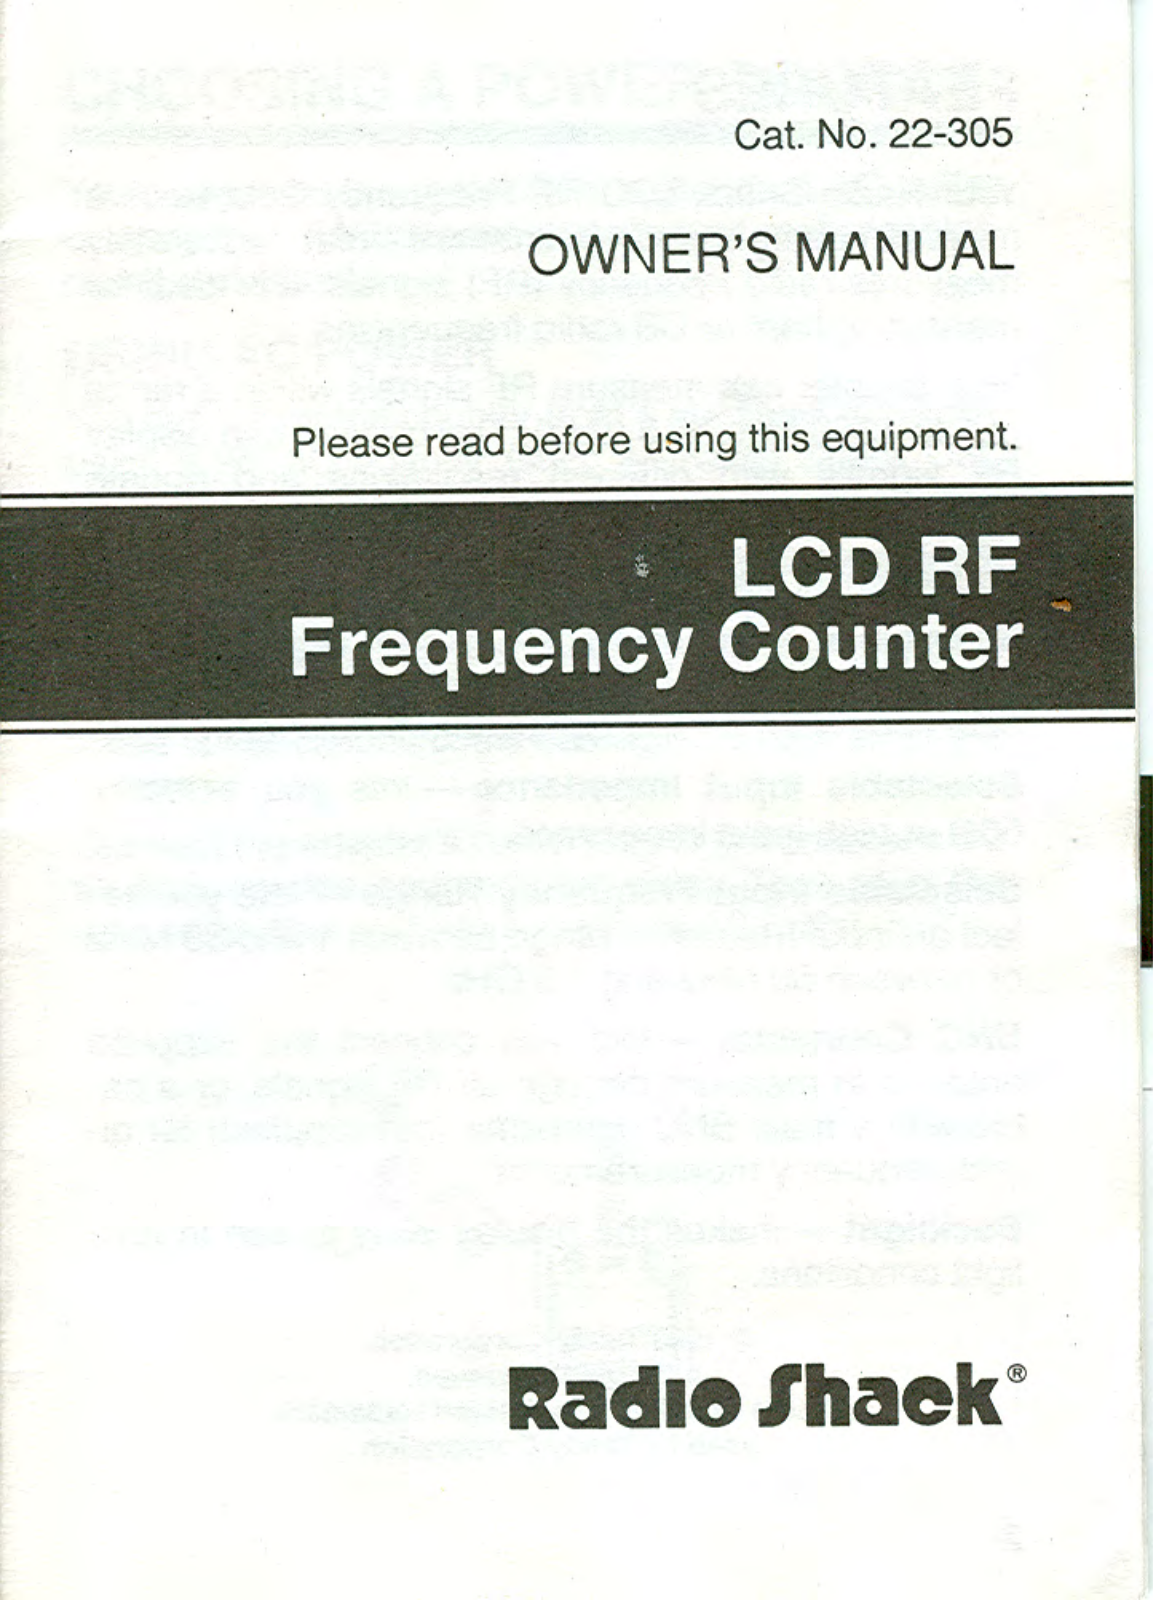 RadioShack 22-305 Owner Manual